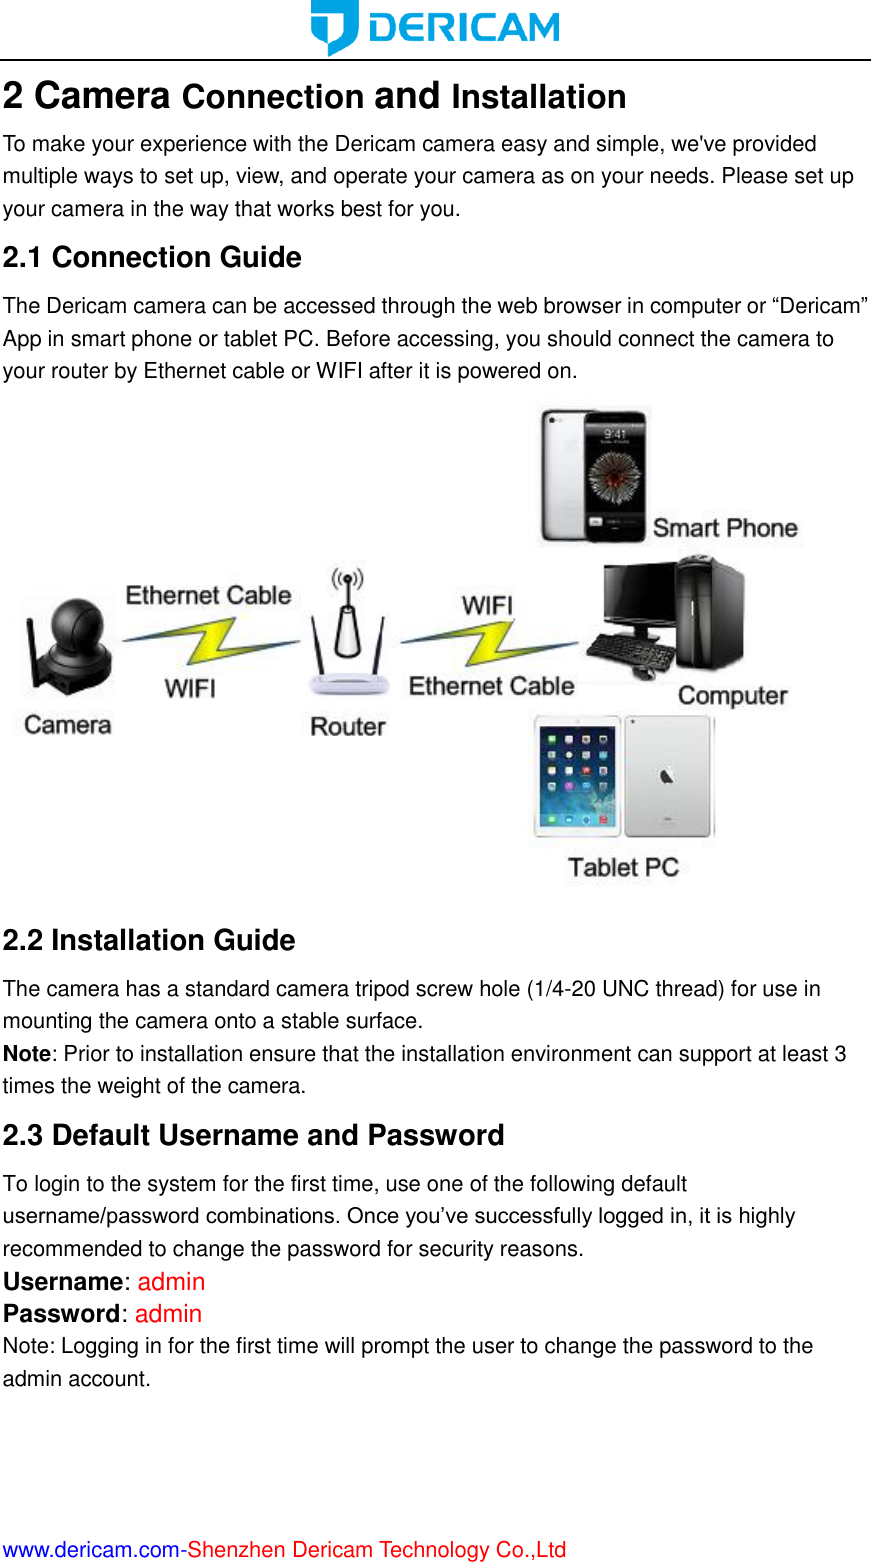 homeguard ip camera instructions manual